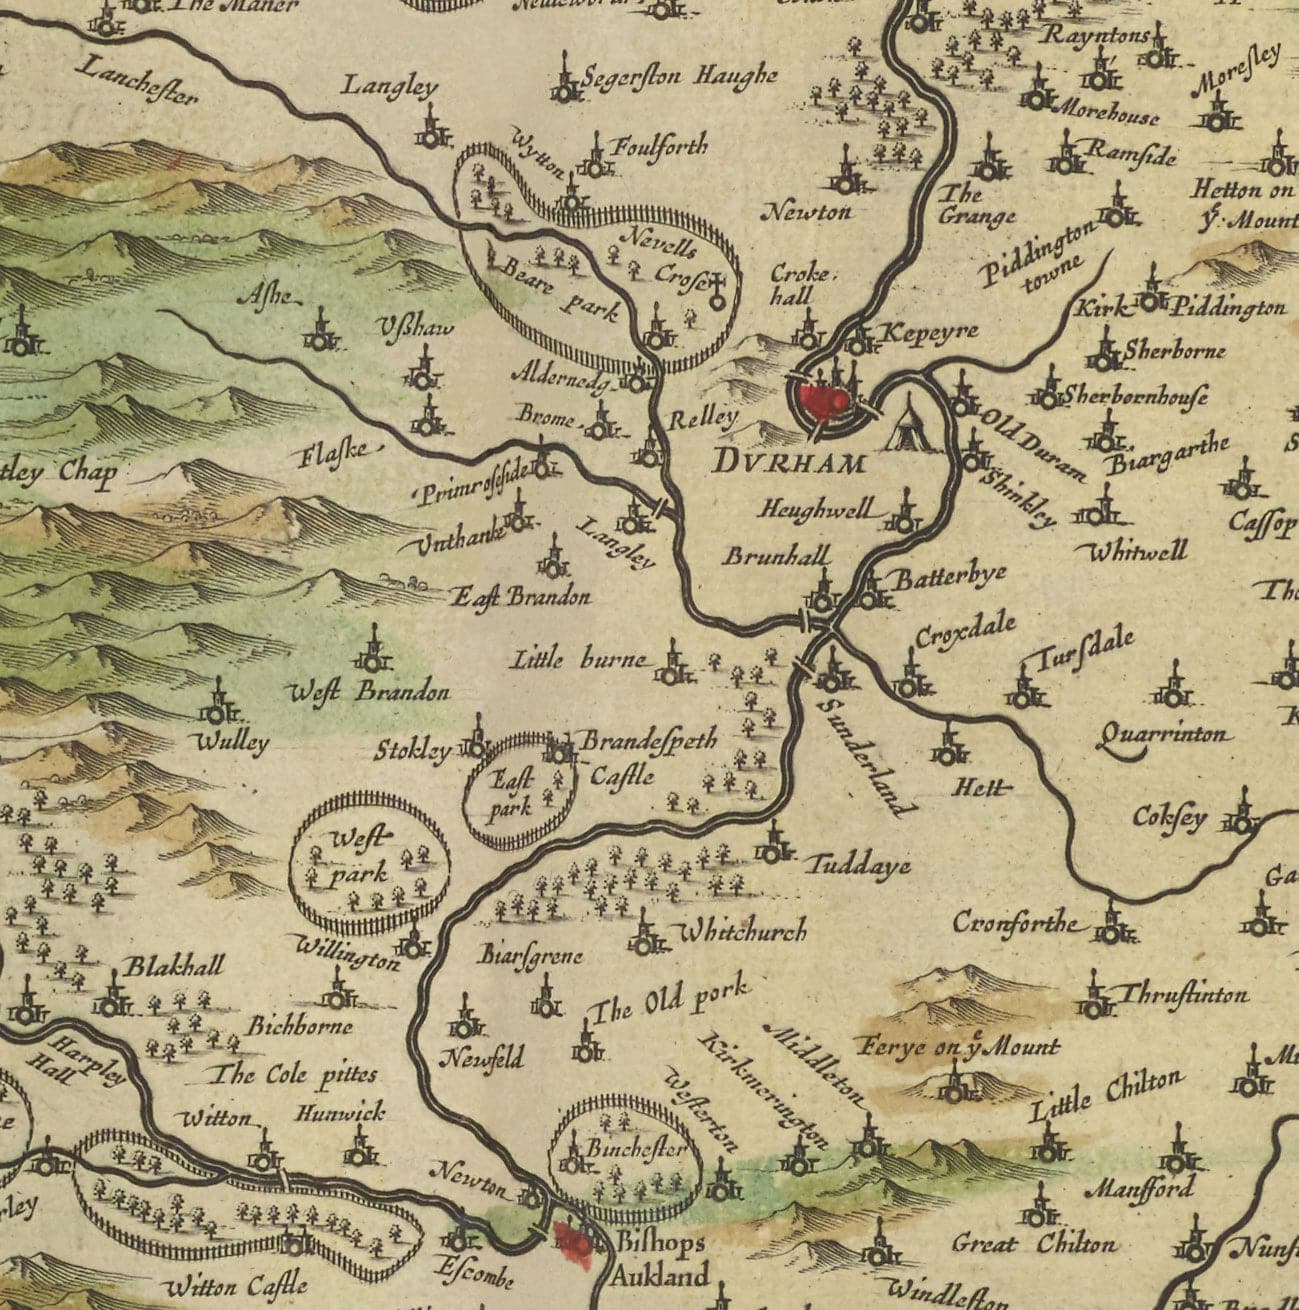 Old Map of County Durham, 1665 by Joan Blaeu - Darlington, Stockton-on-Tees, Sunderland, Hartlepool, Newcastle, Gateshead